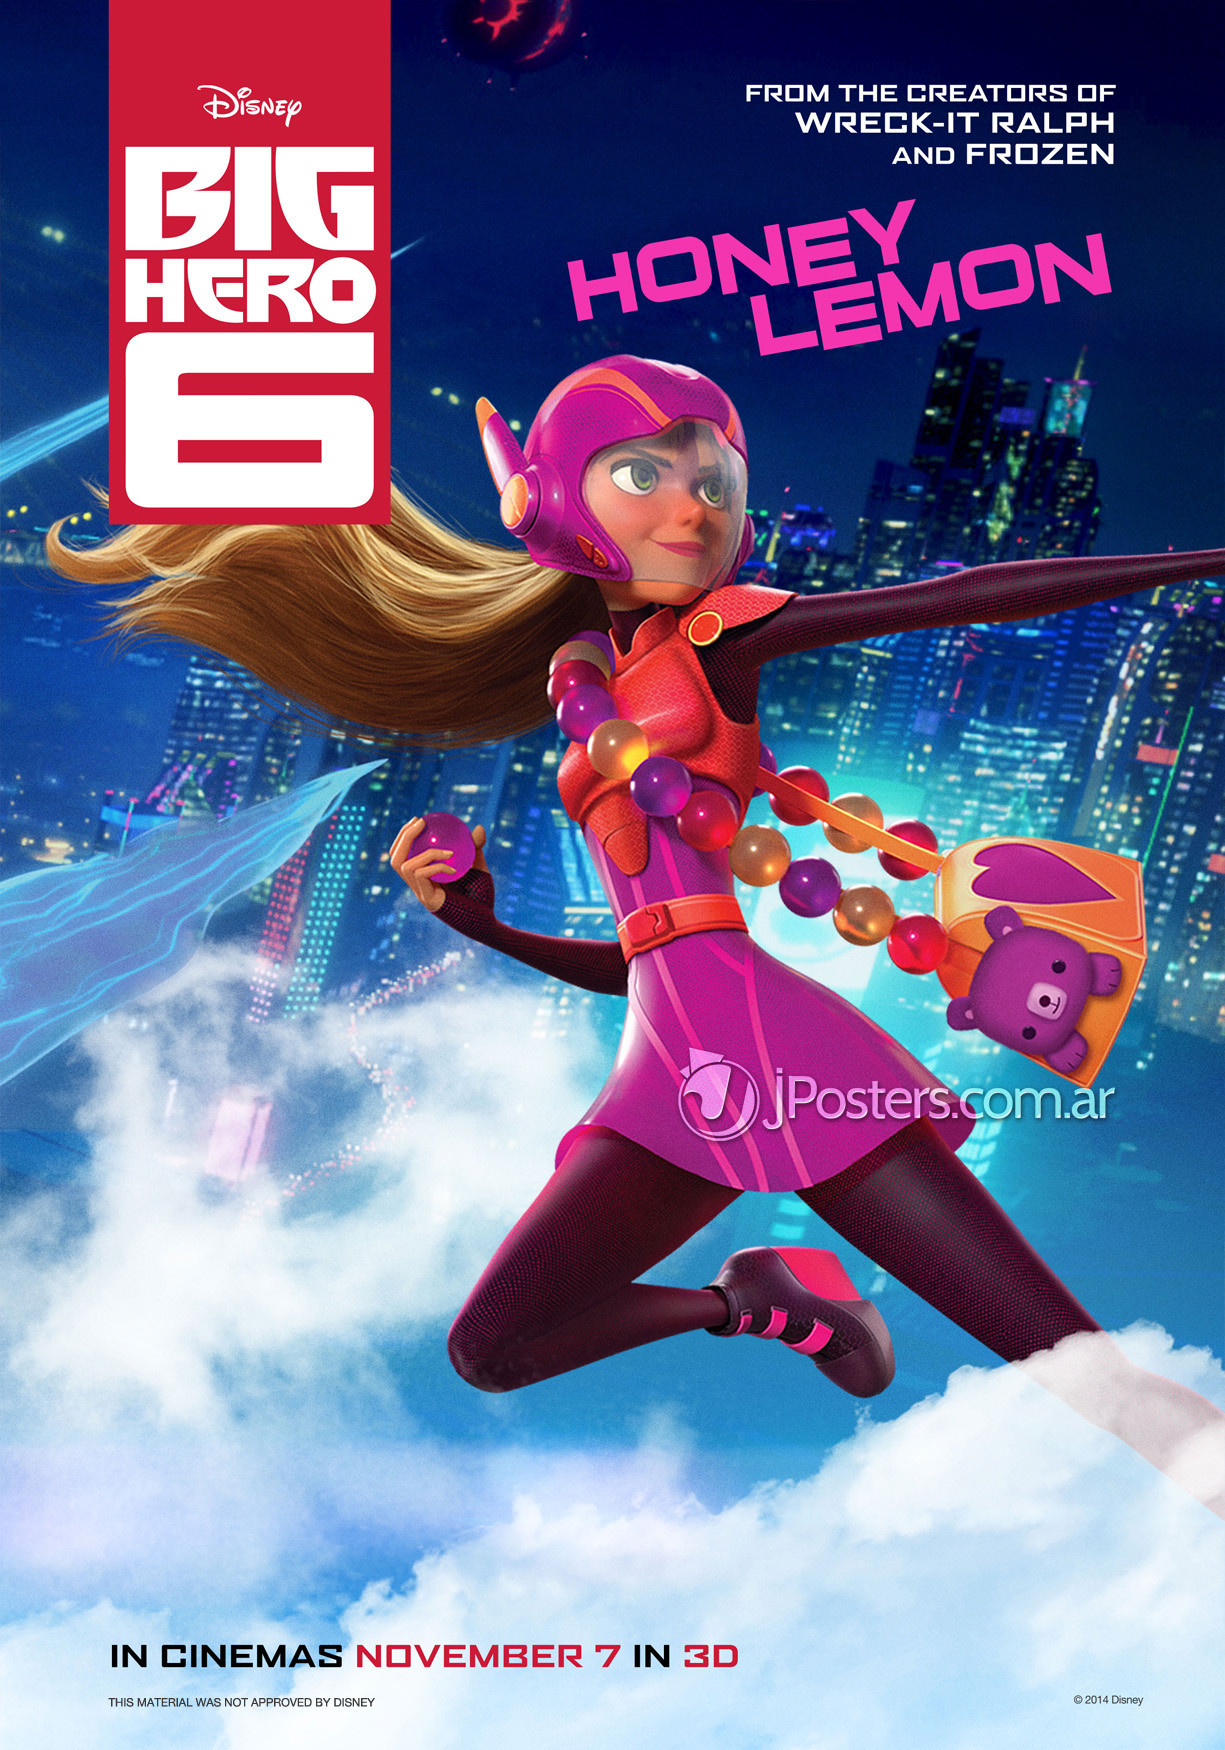 Big-Hero-6-Posters-Honey-Lemon-disney-37256180-1225-1750.jpg